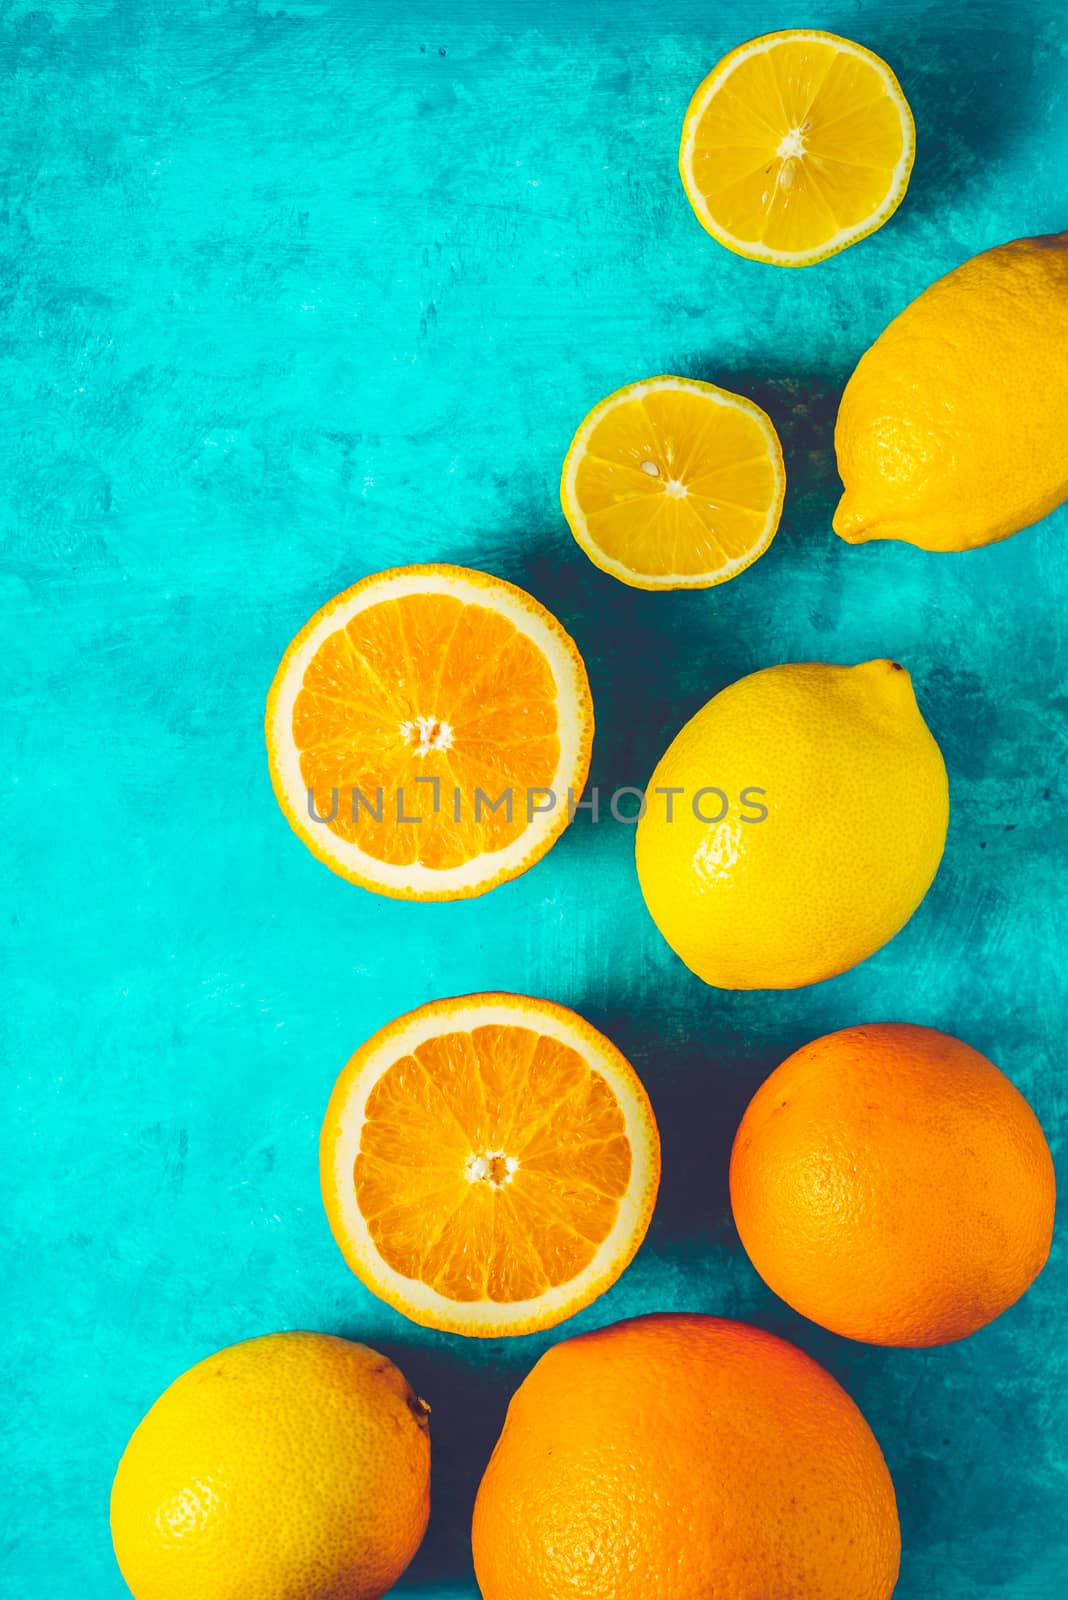 Lemons and oranges on the cyan background vertical by Deniskarpenkov